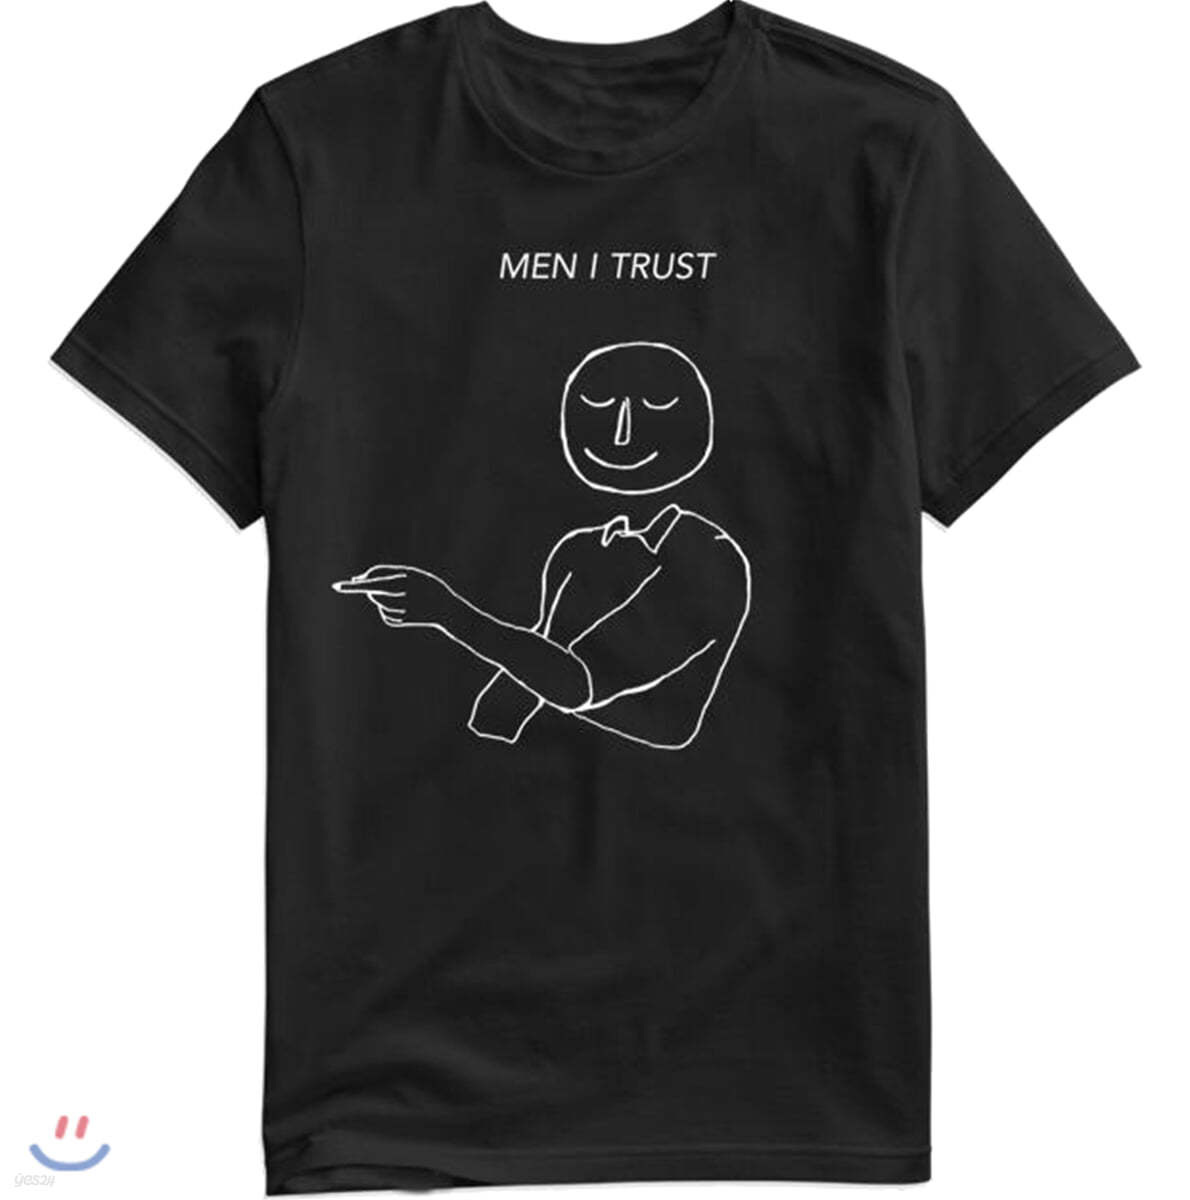 Men I Trust (맨 아이 트러스트) - Men I Turst 티셔츠 [블랙] S